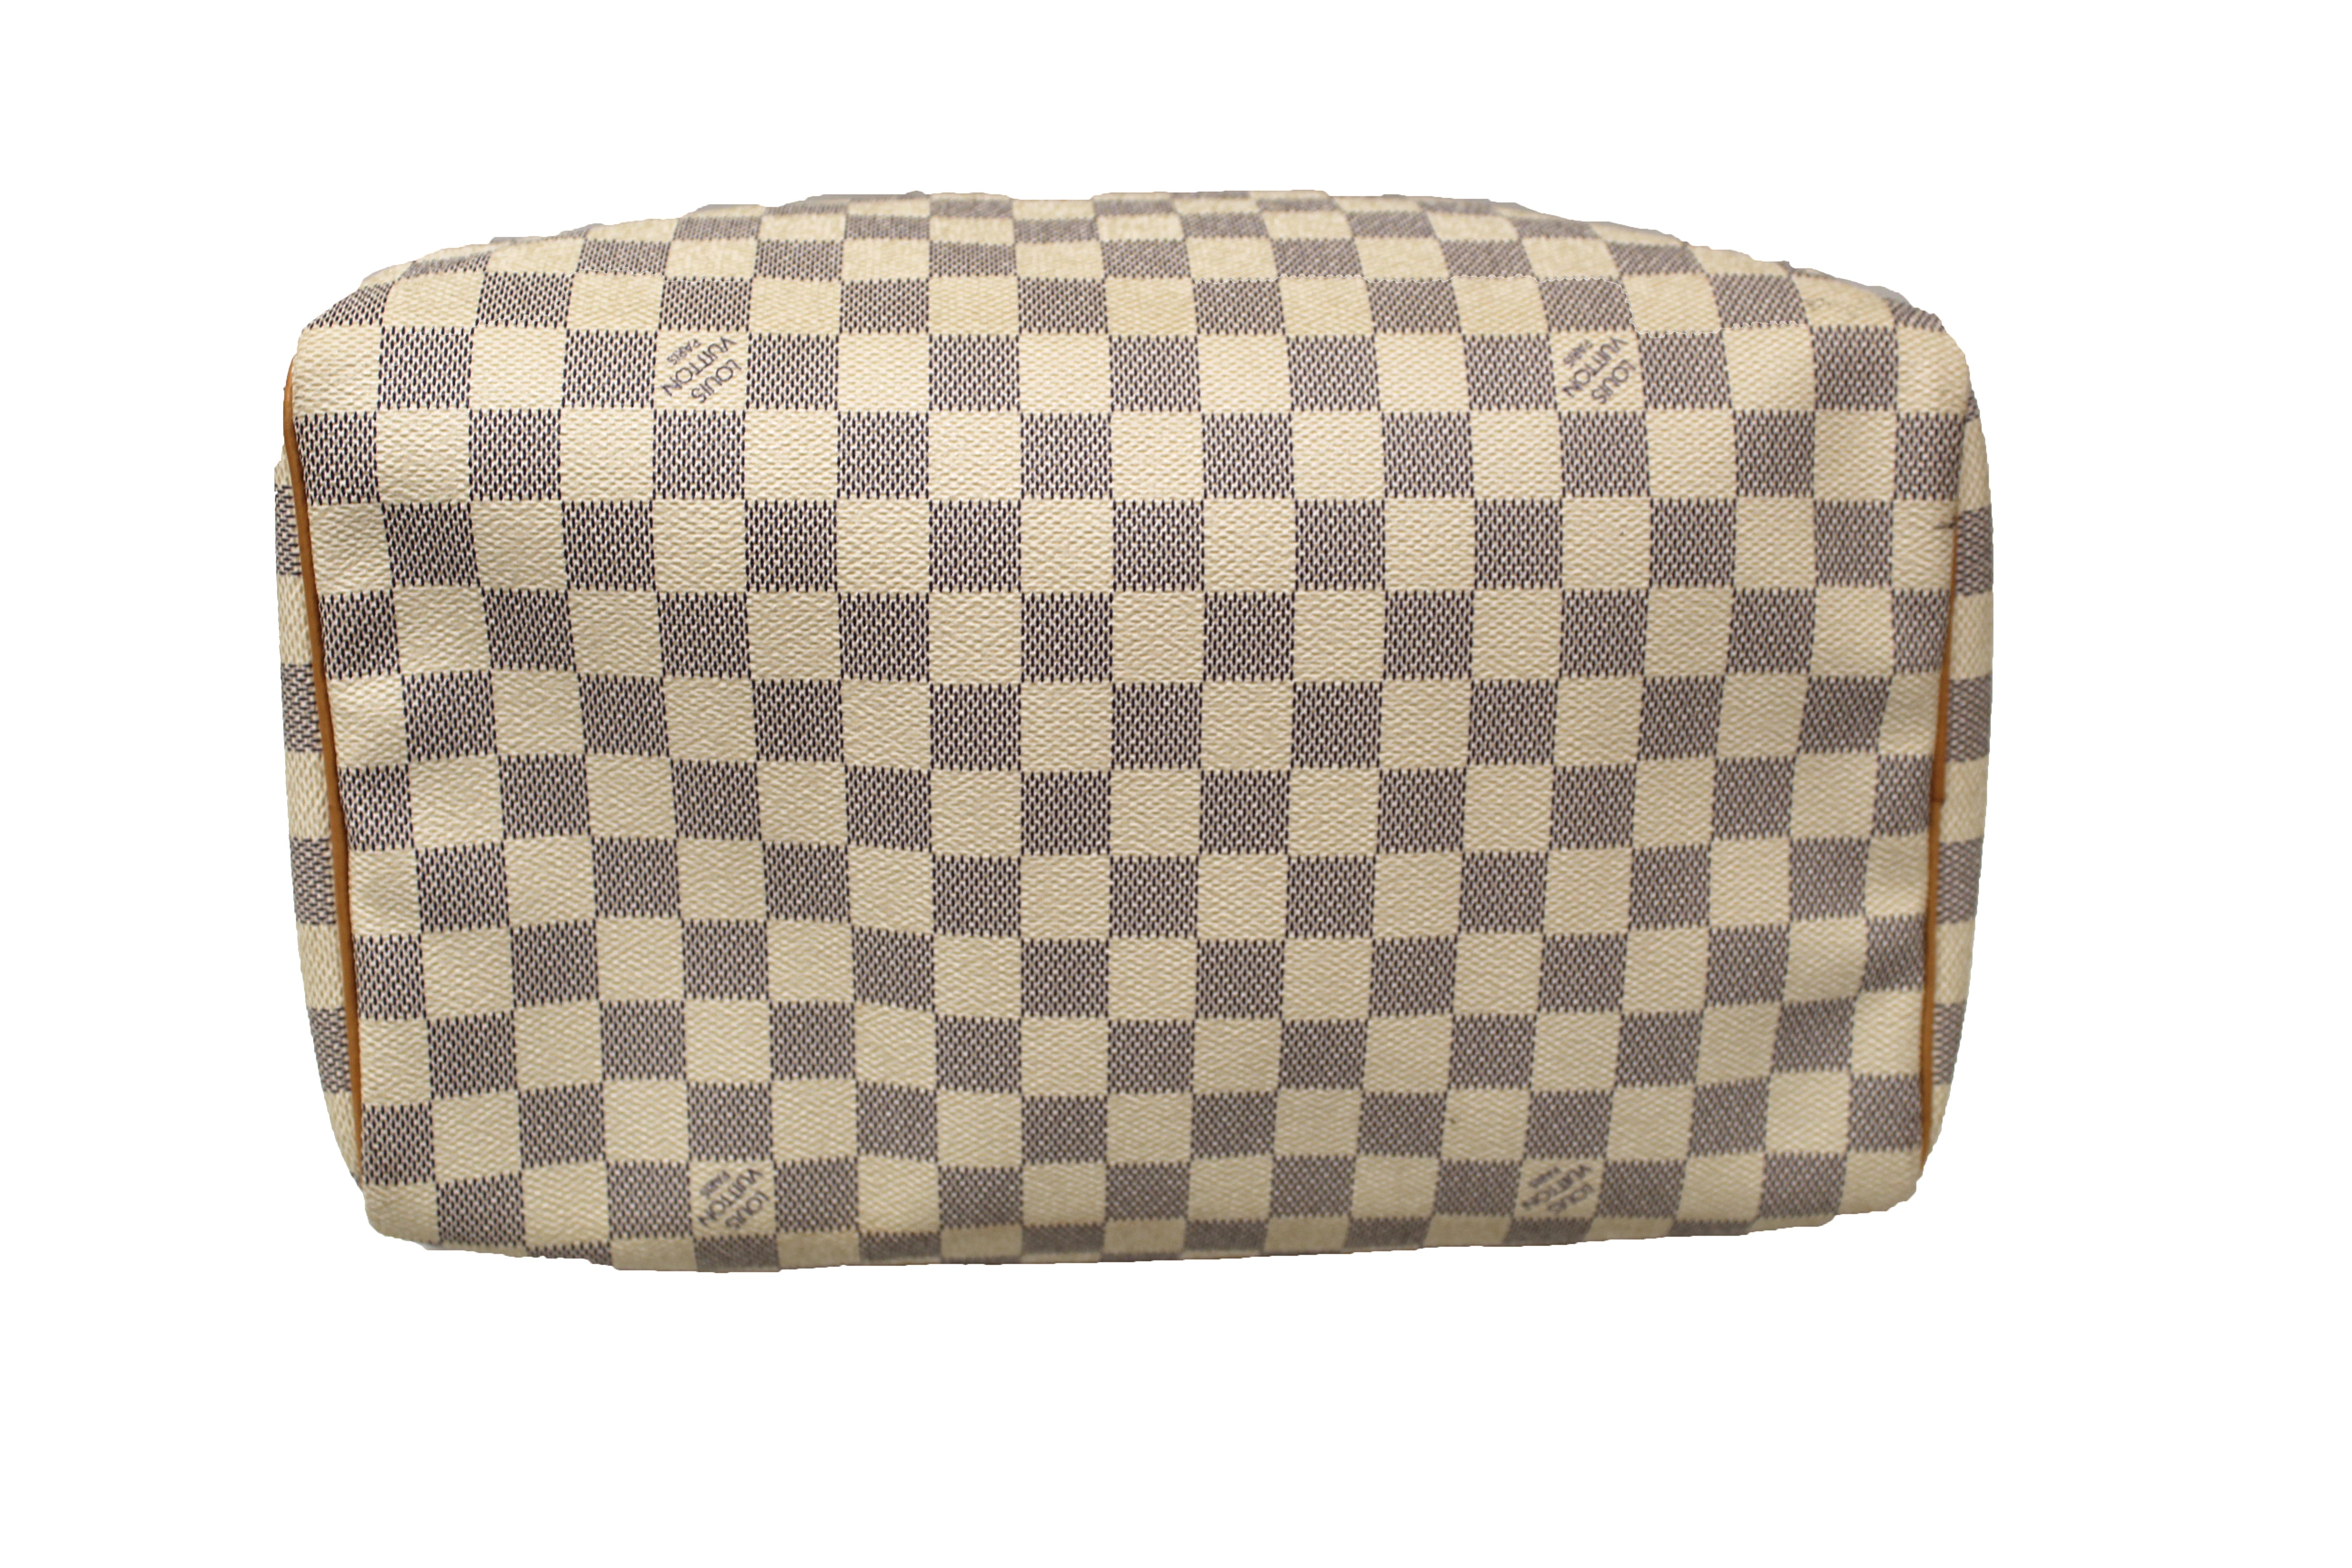 Authentic Louis Vuitton Damier Azur Canvas Speedy 30 Handbag